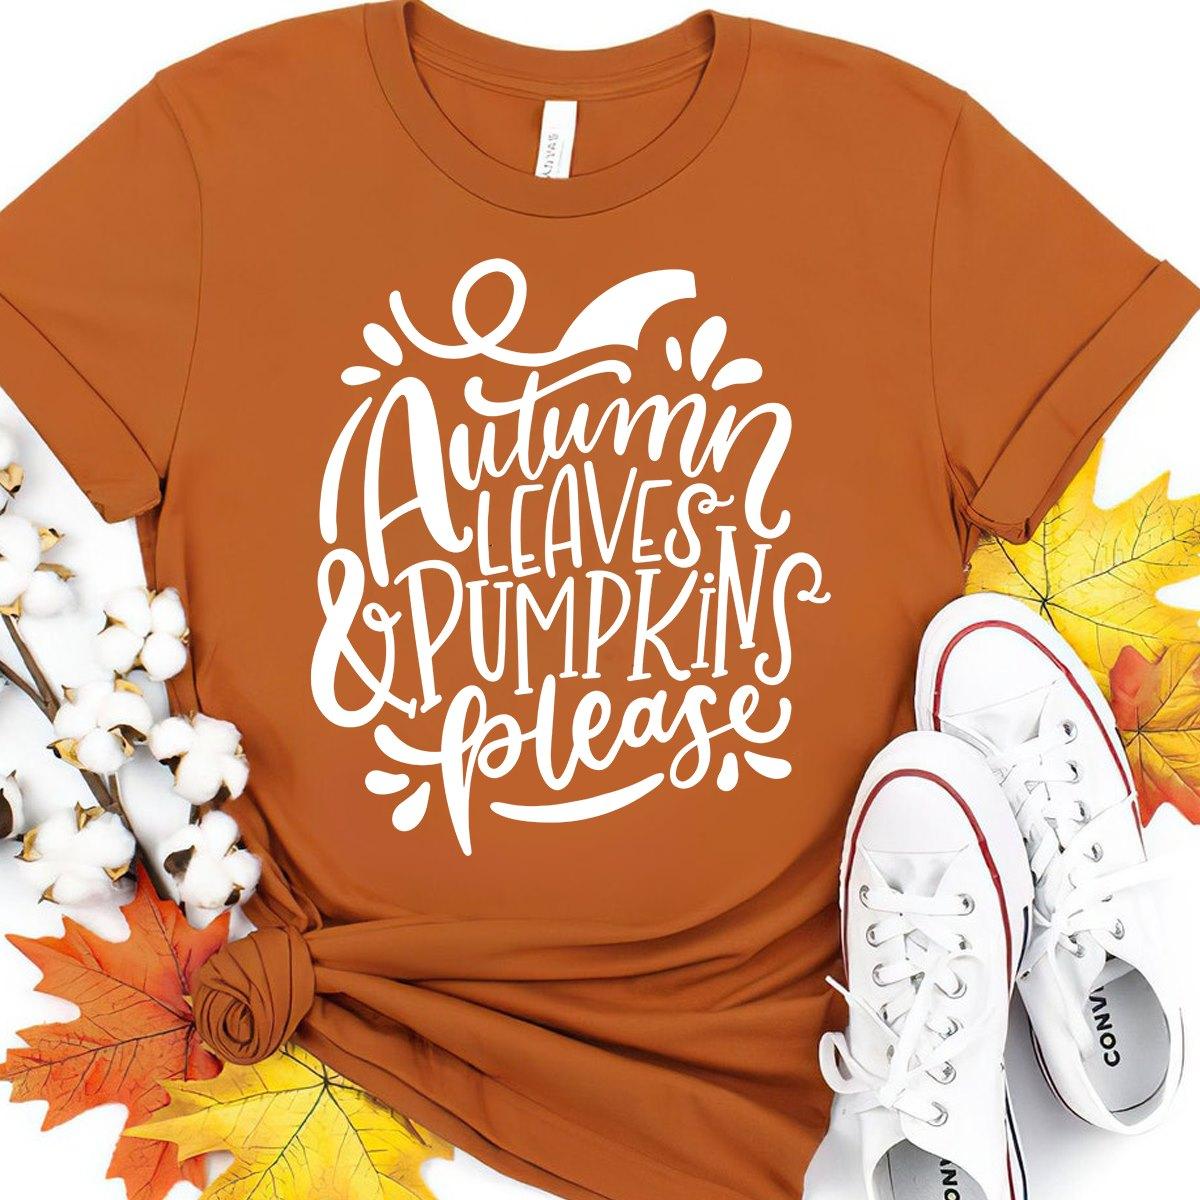 Autumn leaves and pumpkins please - Autumn wonderful season, autumn and thanksgiving day